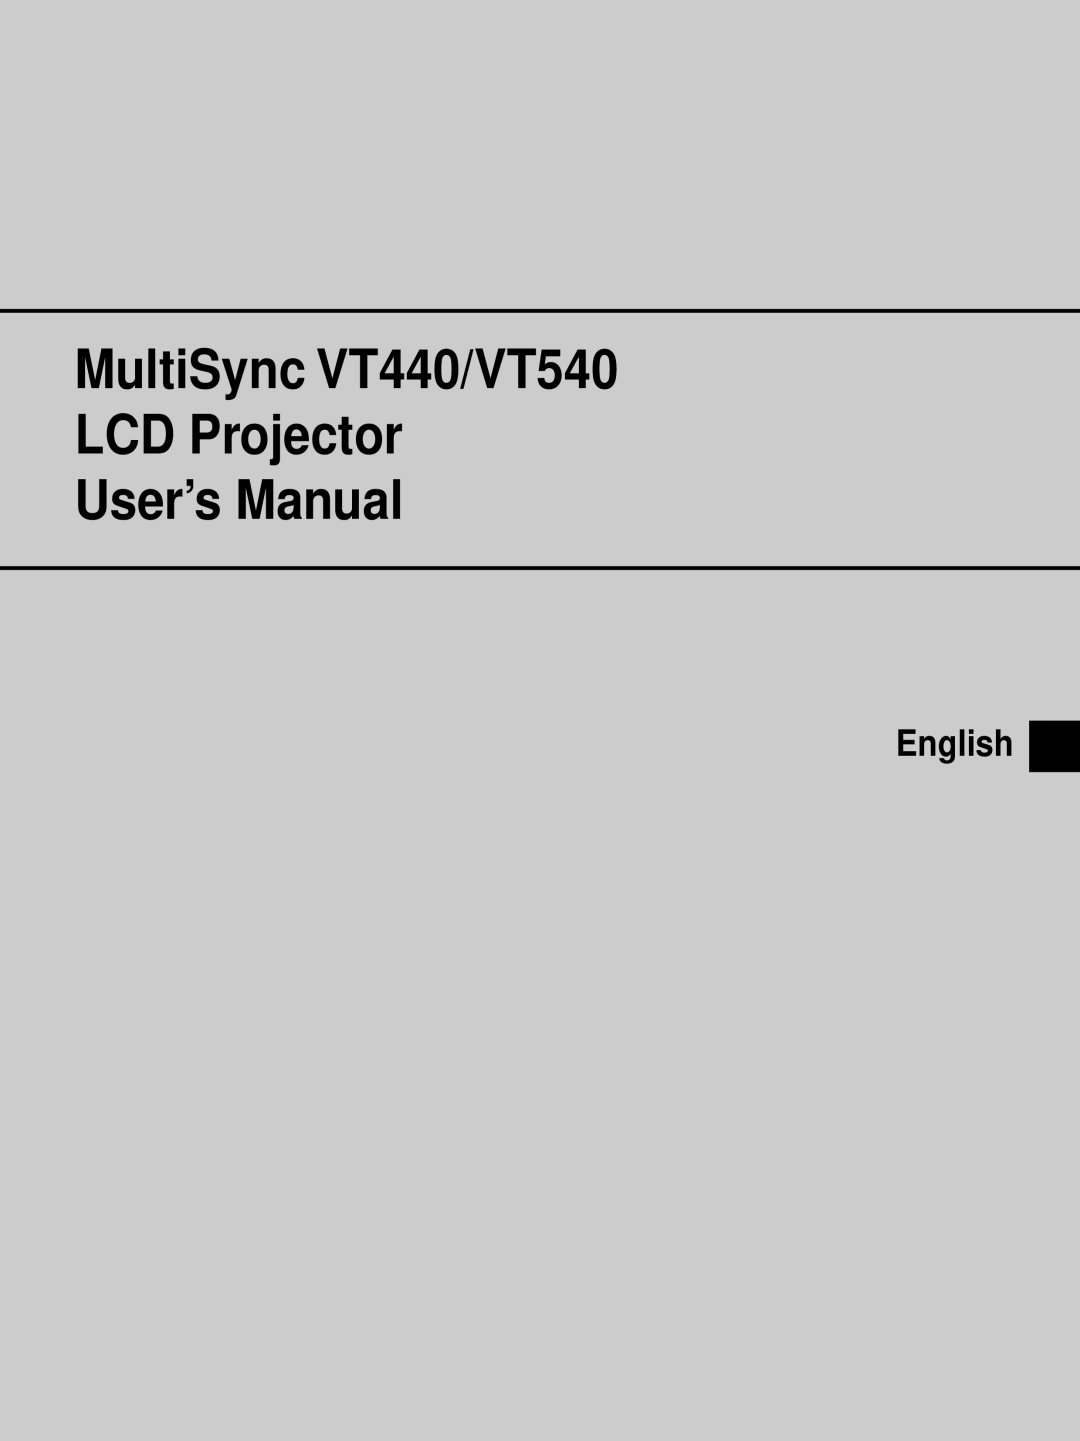 NEC VT540, VT440 user manual English 